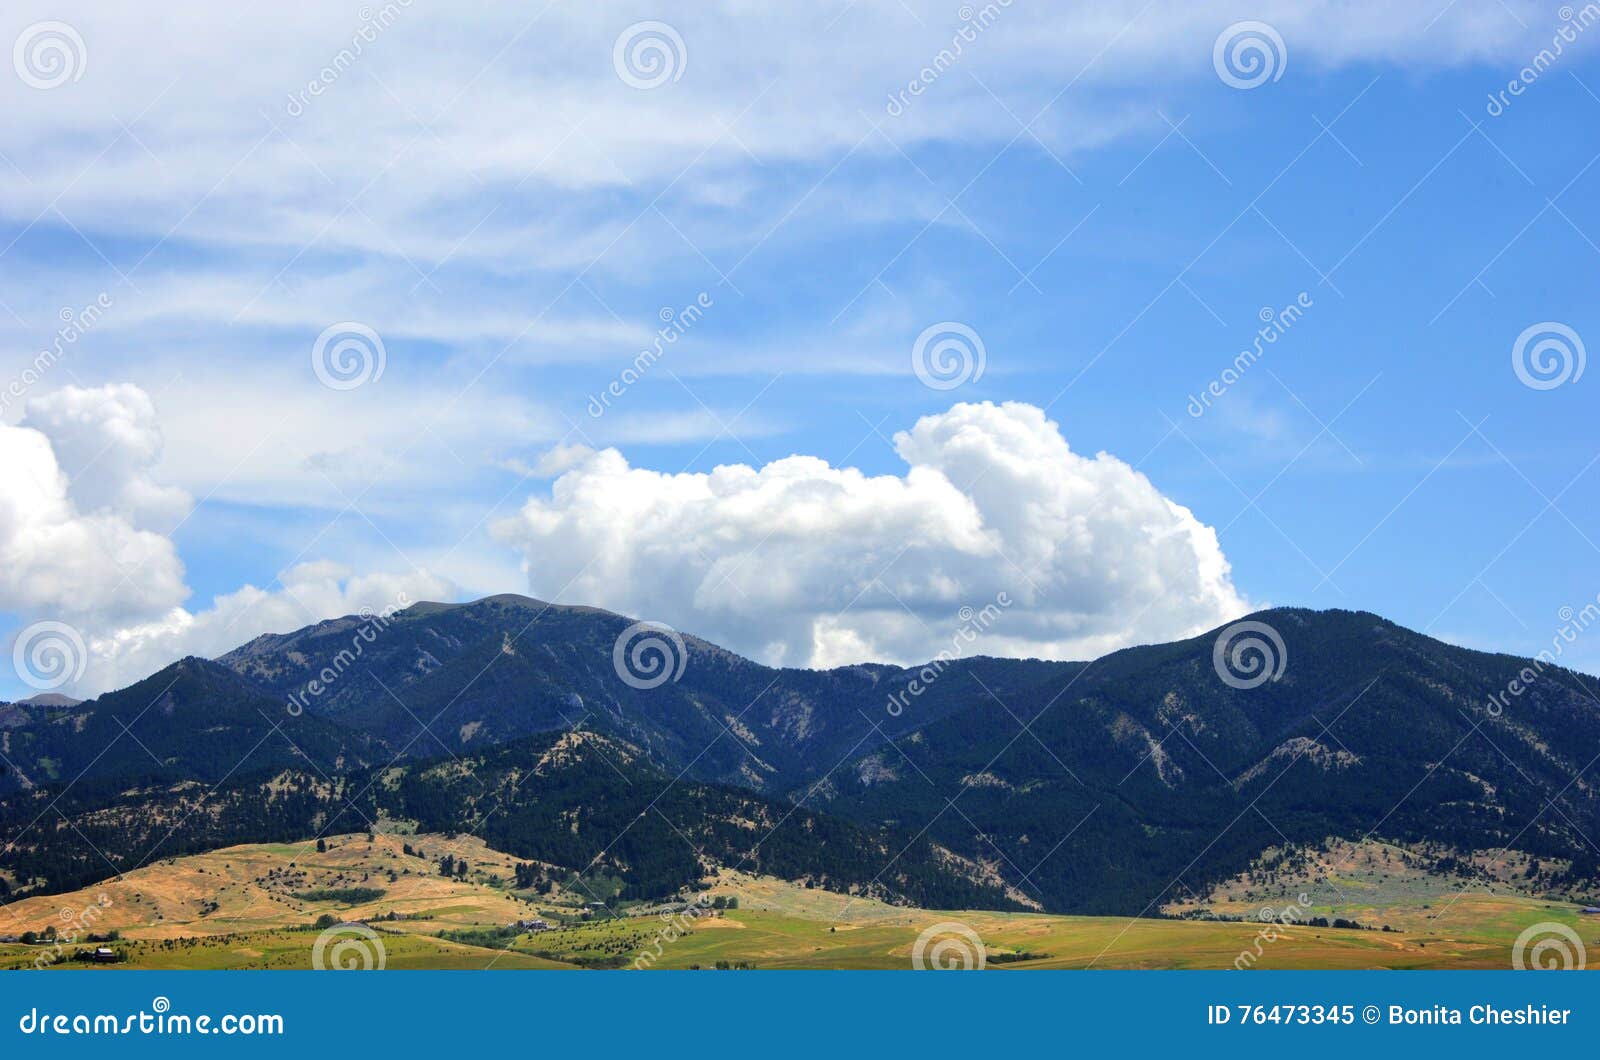 bridger mountain range